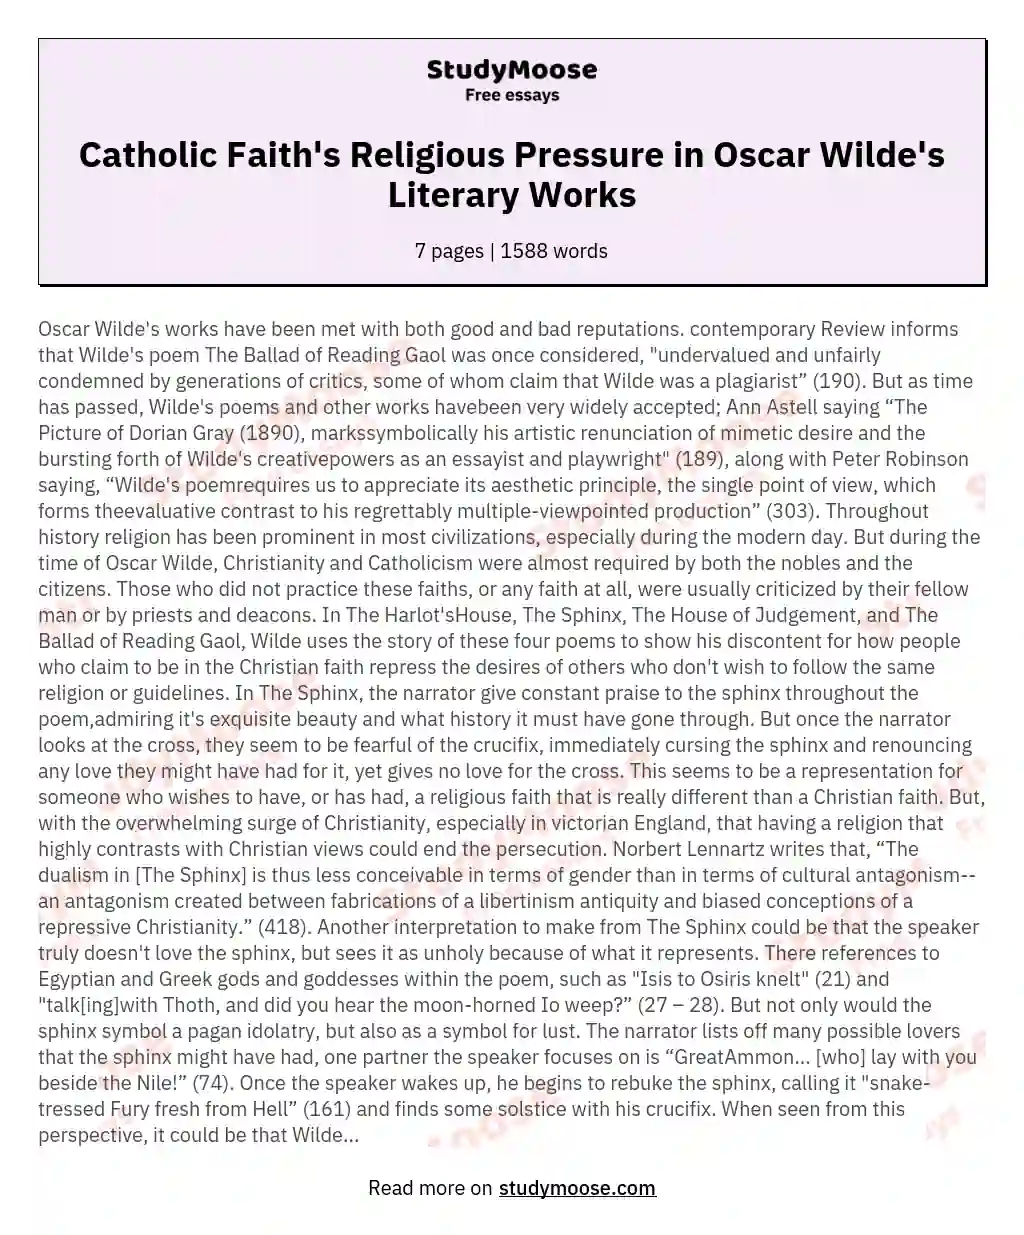 Catholic Faith's Religious Pressure in Oscar Wilde's Literary Works essay